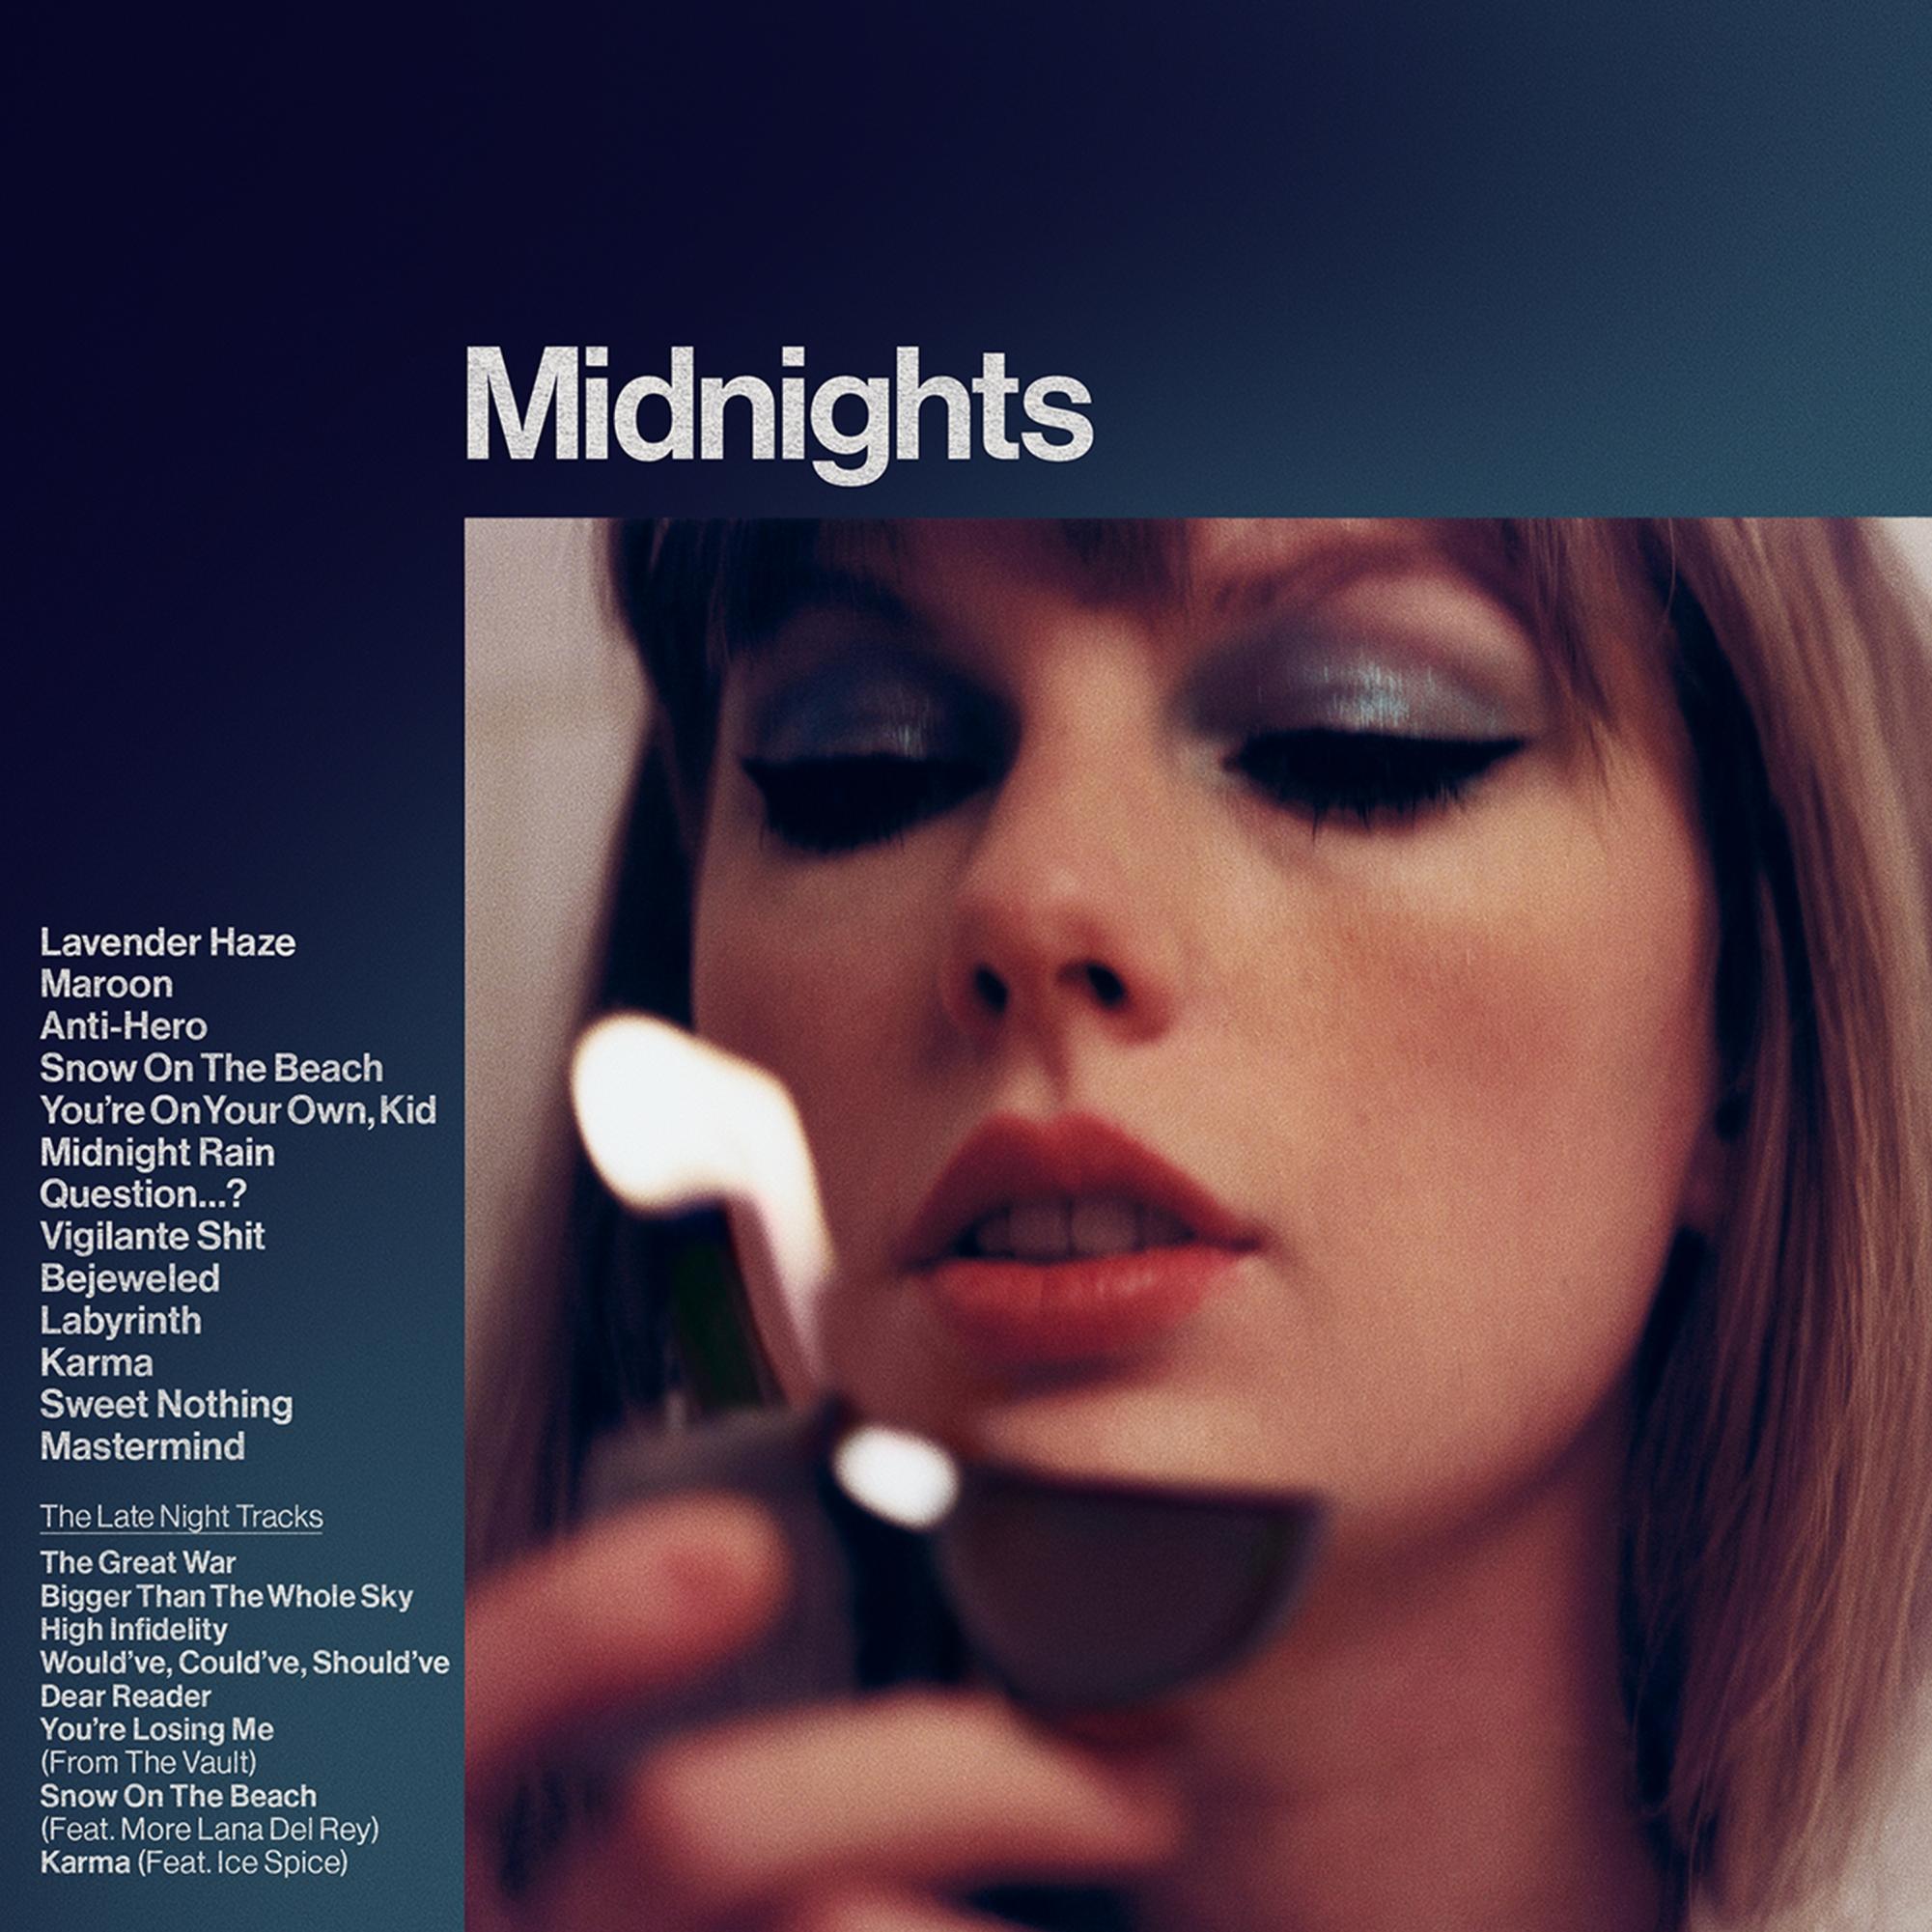 Taylor Swifts tenth studio album Midnights. Image credit: Republic